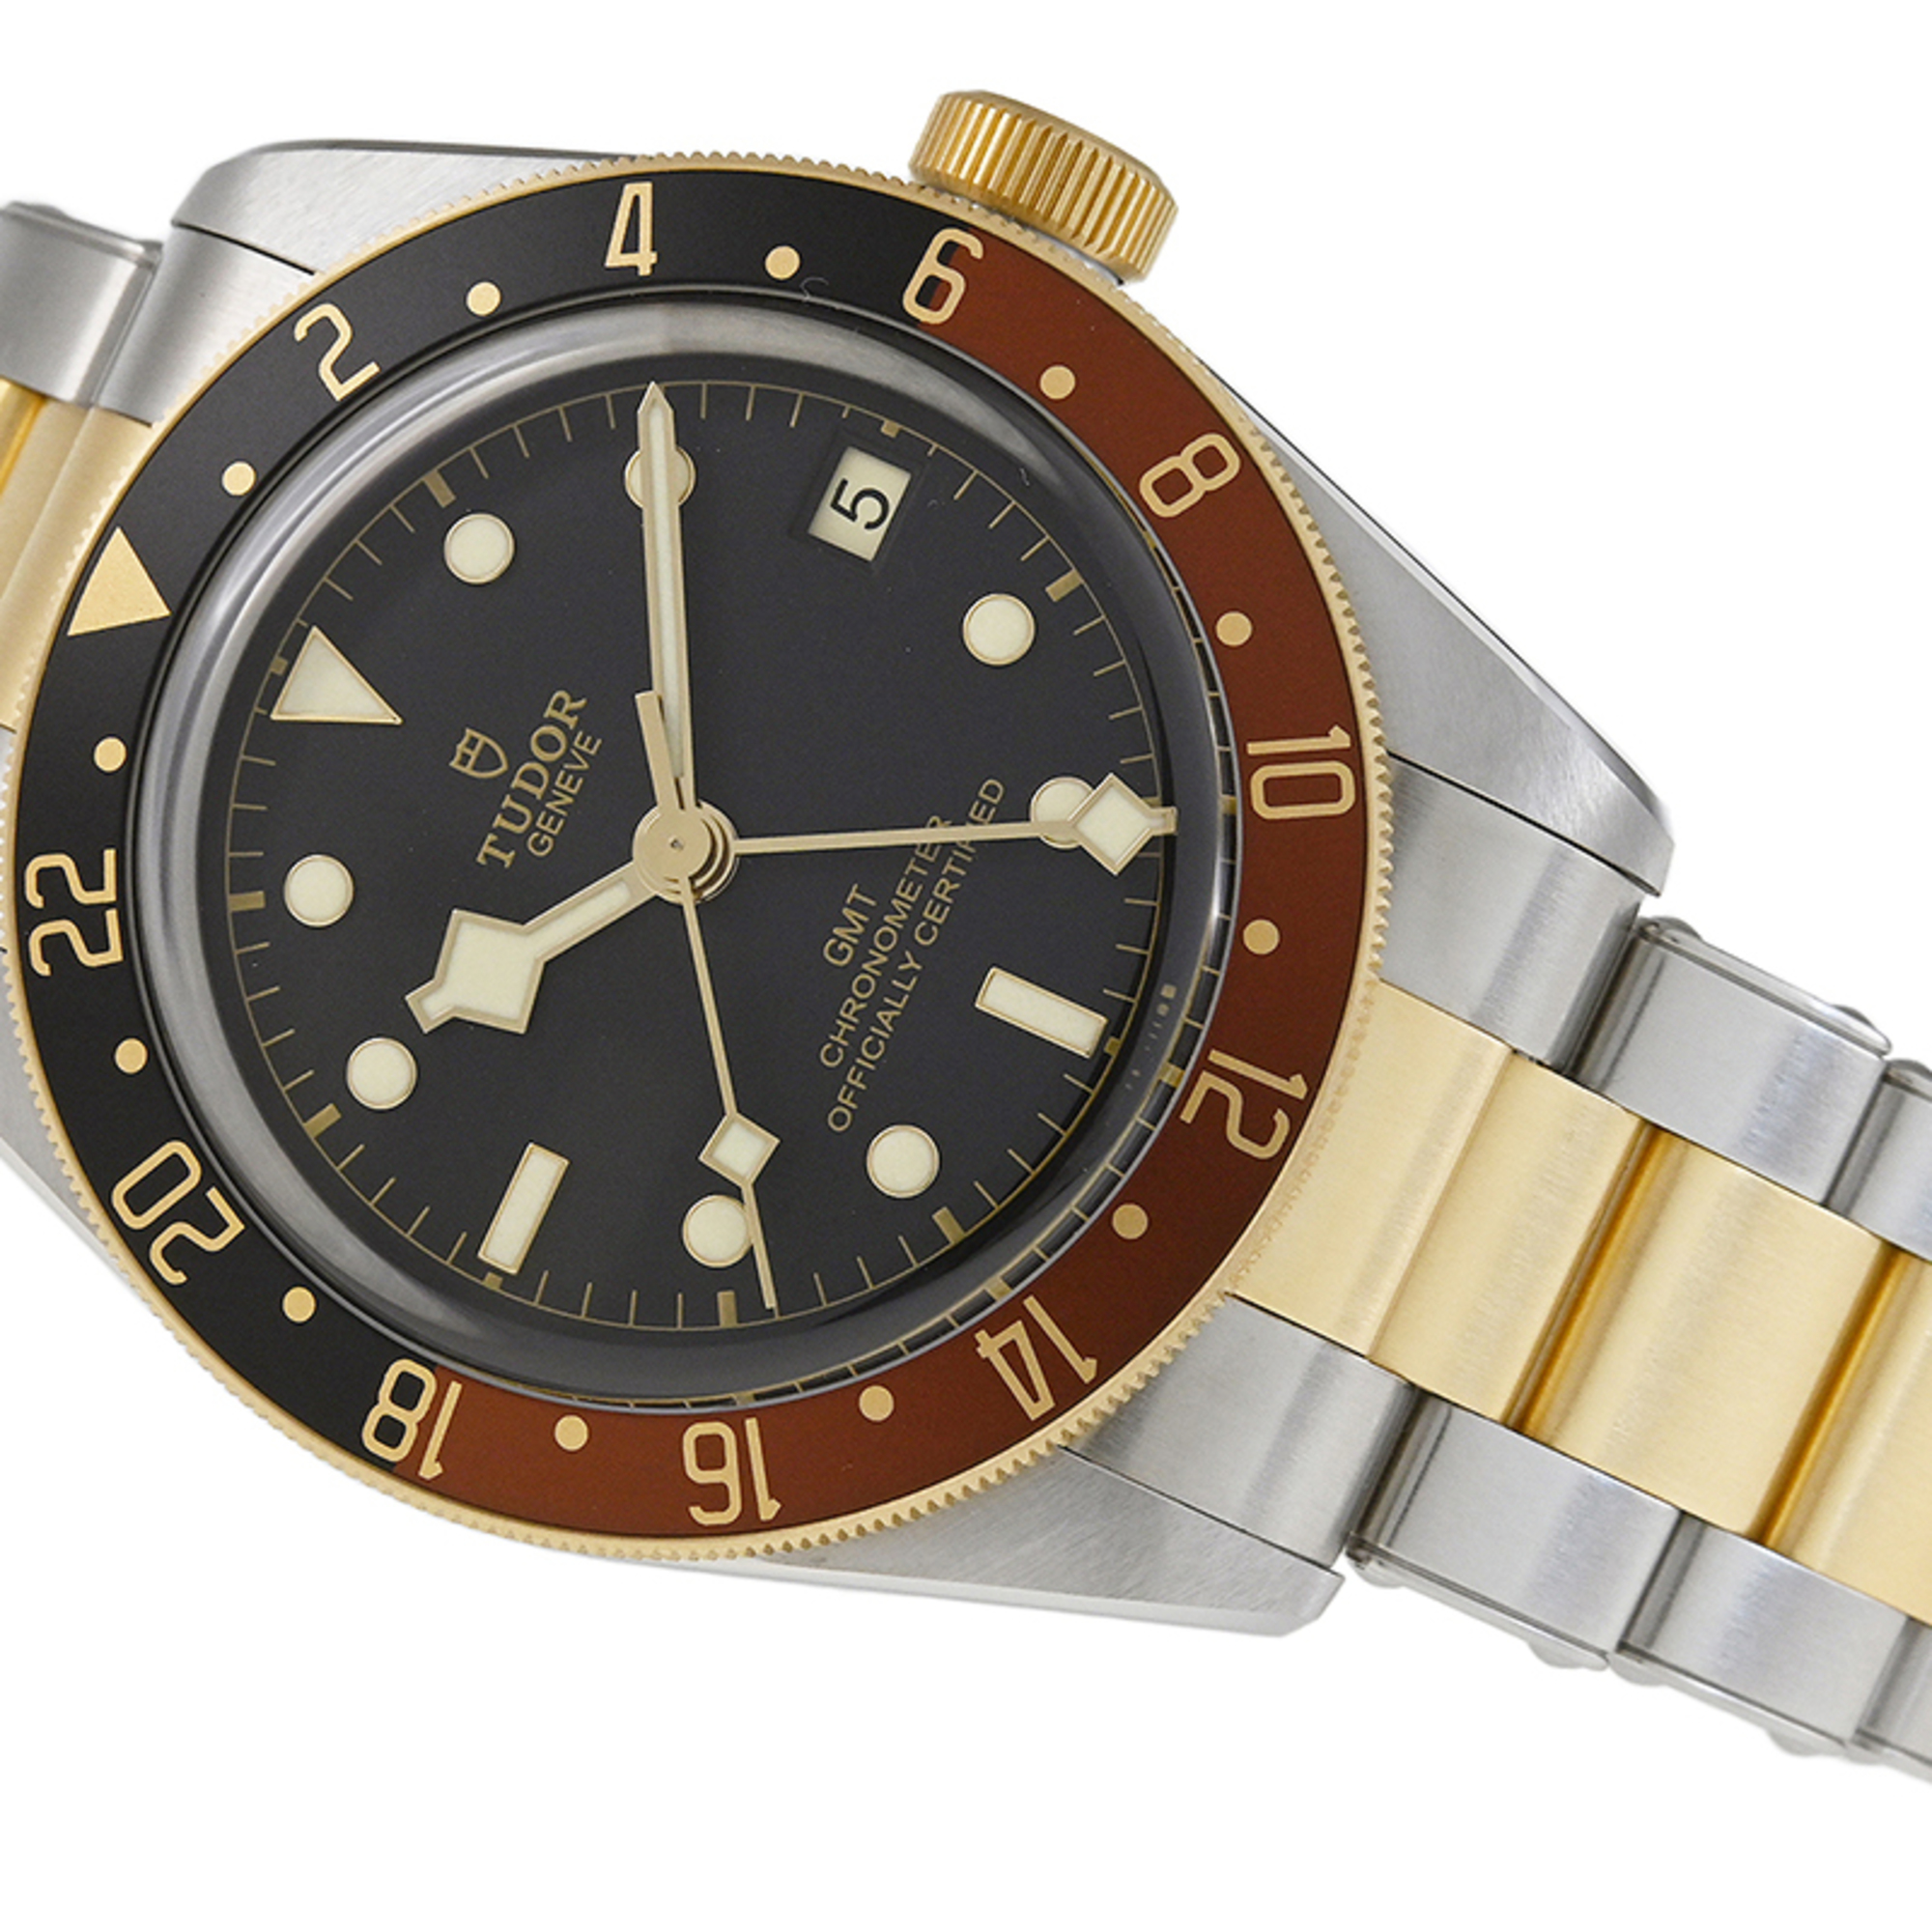 TUDOR Black Bay GMT S&G watch 79833MN